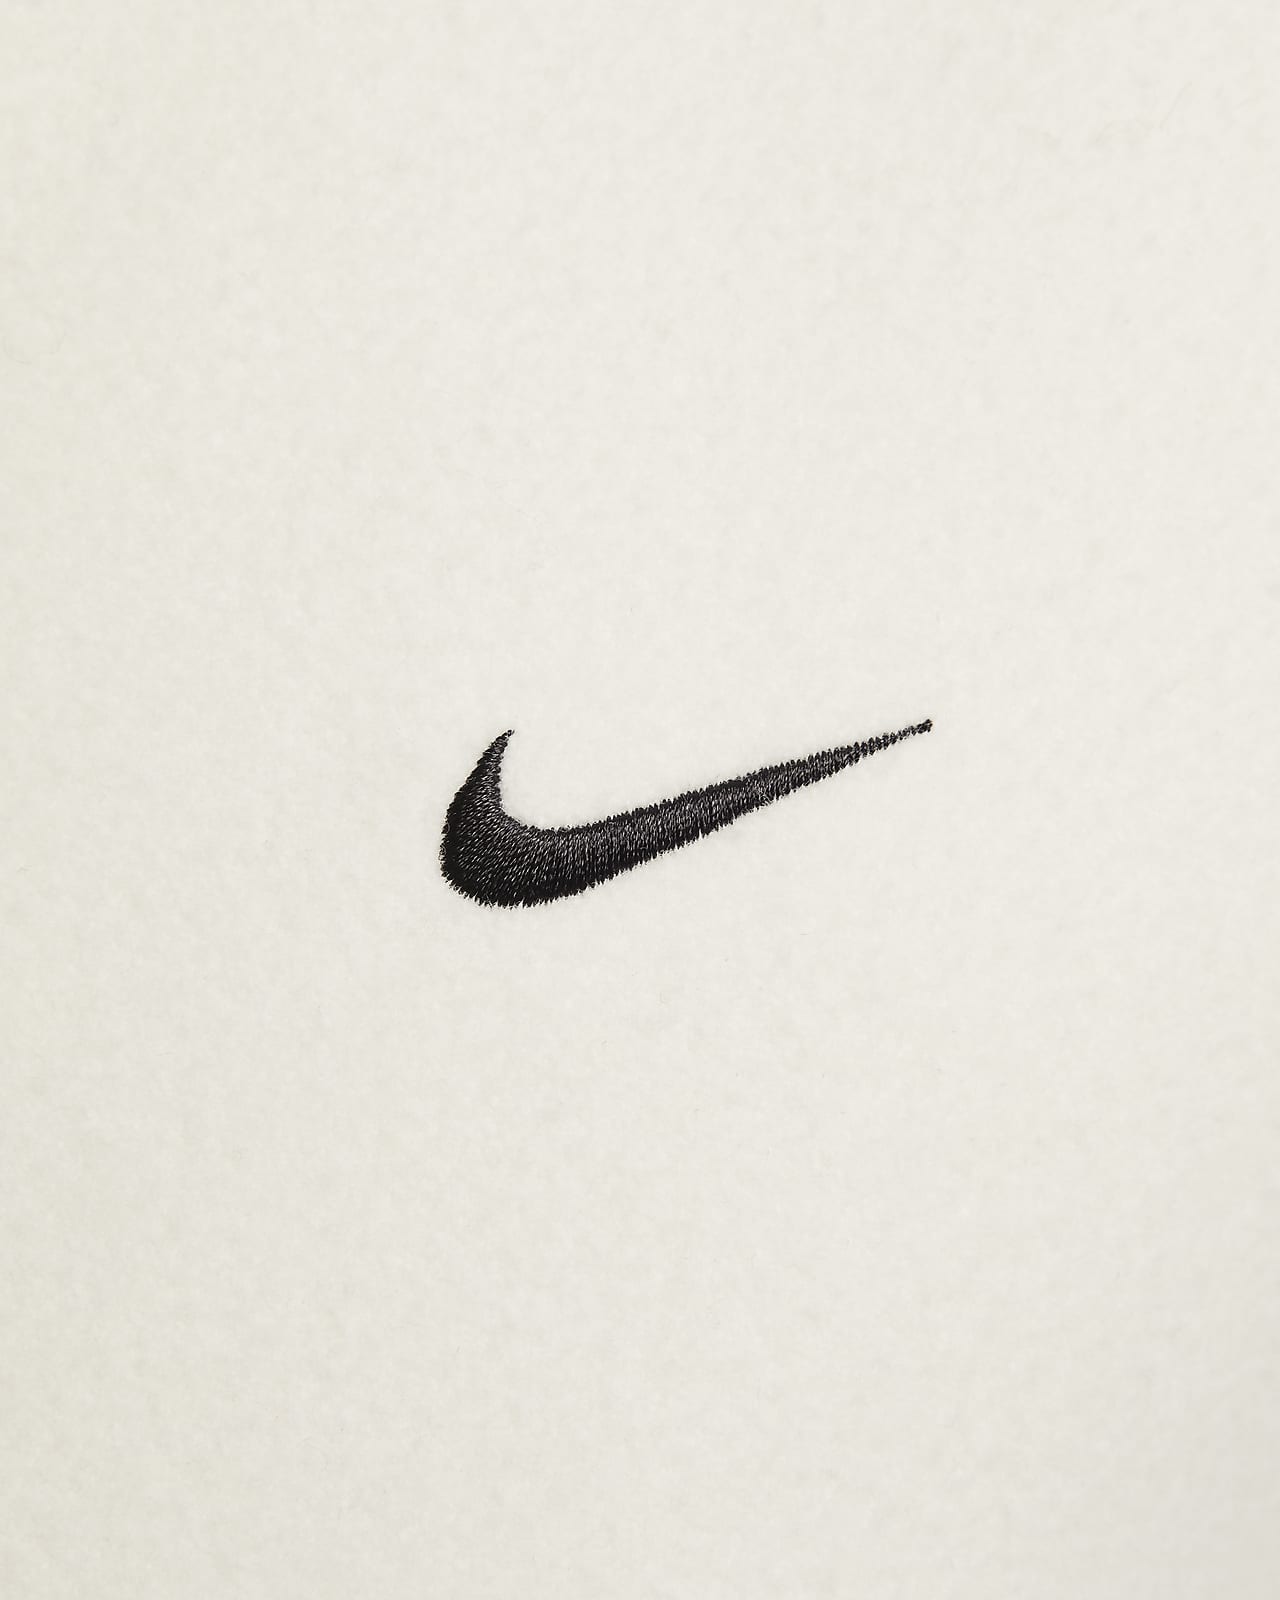 Nike Nike Authentics Men's Varsity Jacket Black